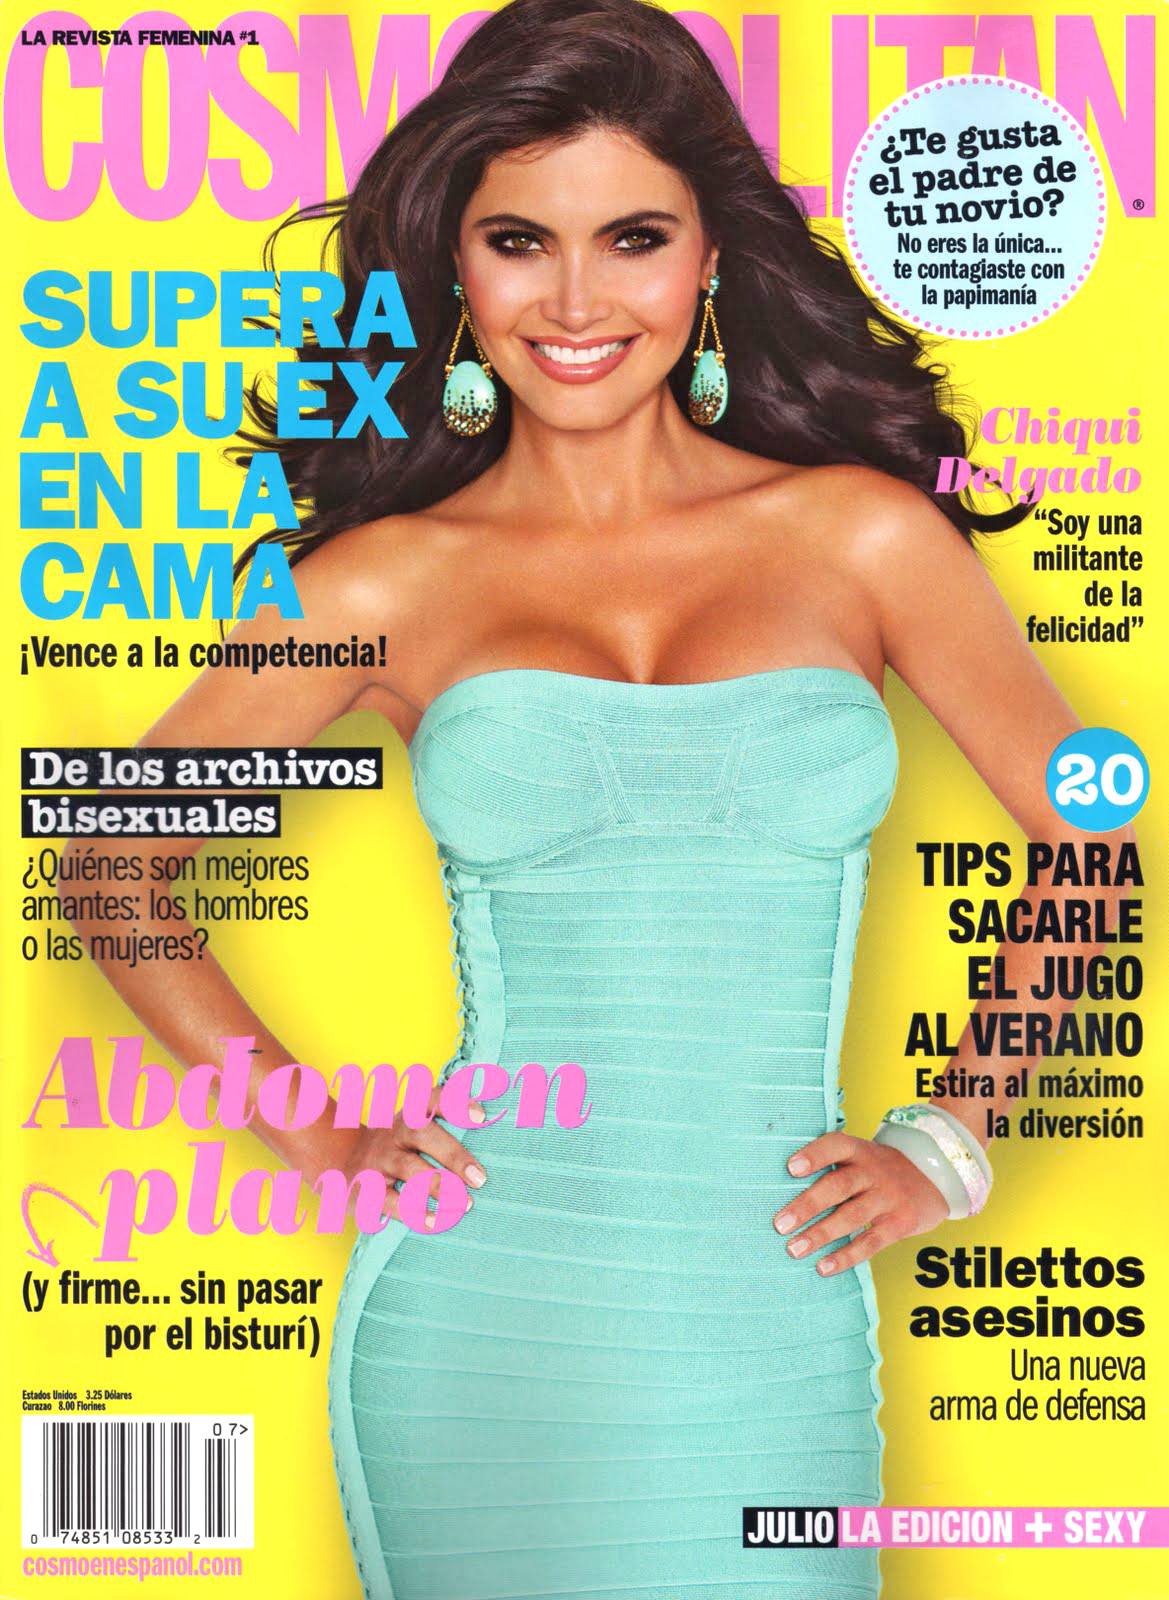 Cosmopolitian Magazine Cover, beauty, fashion, retouch.jpg